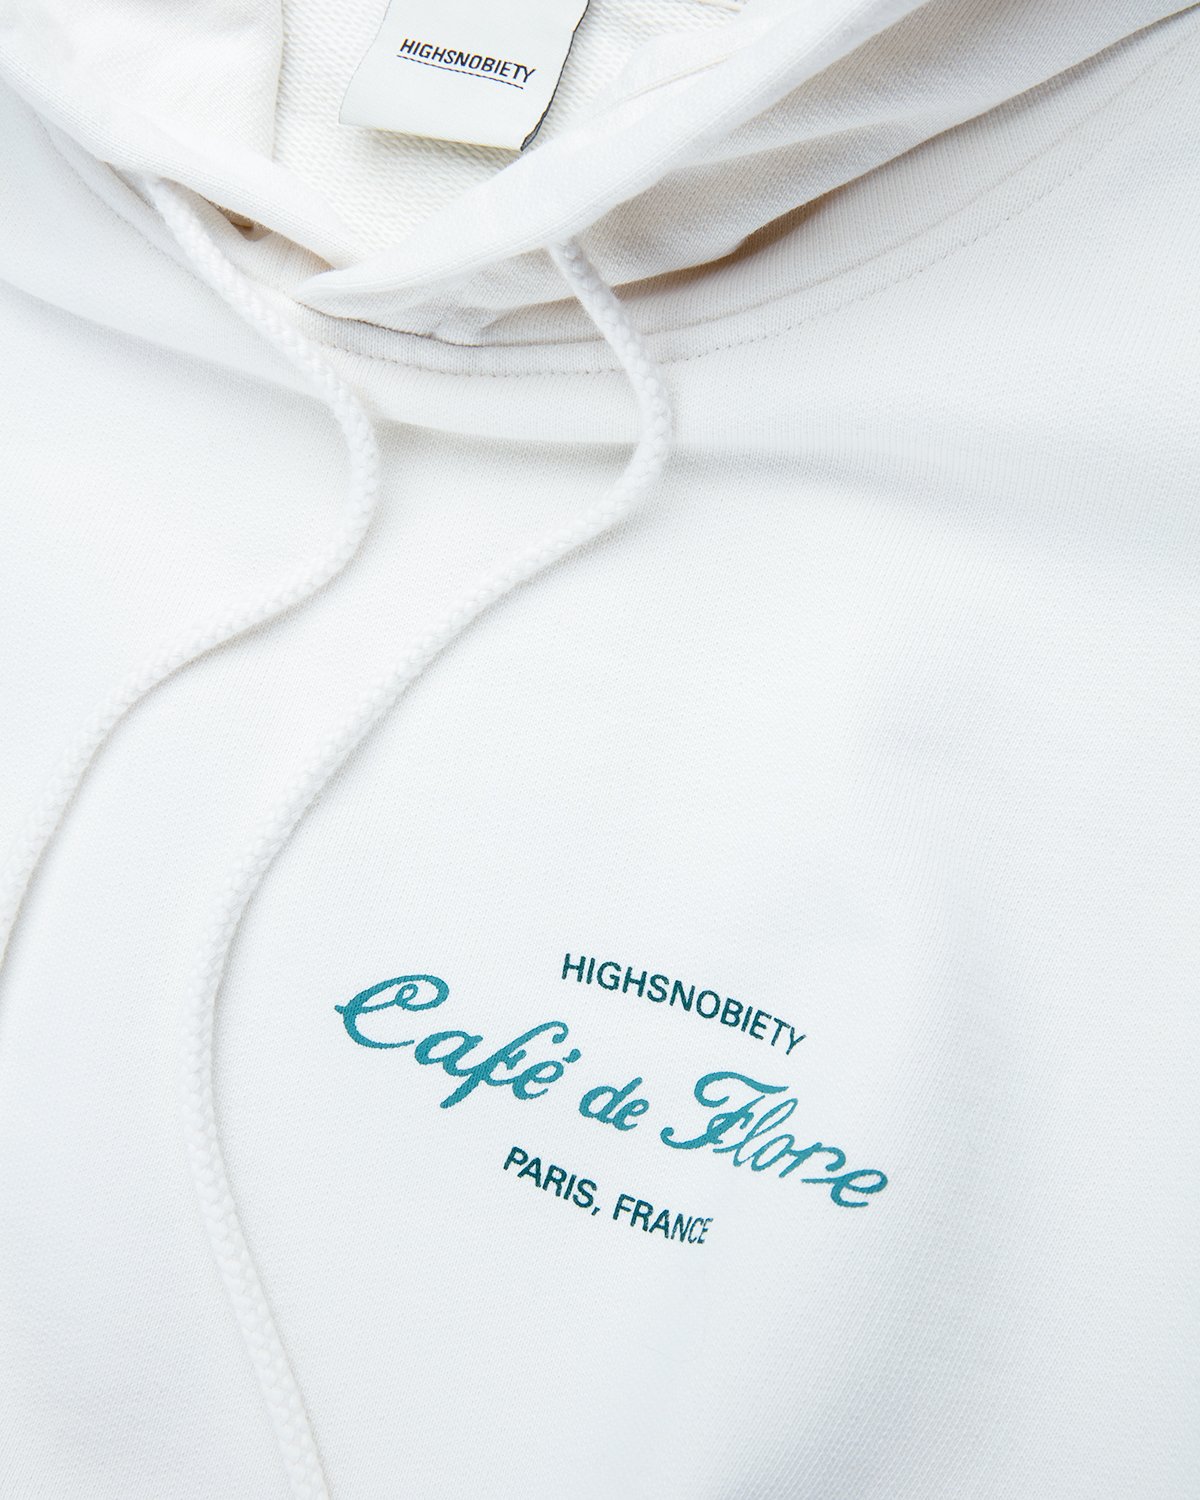 Highsnobiety - Not In Paris 3 x Cafe De Flore Hoodie Eggshell - Clothing - Beige - Image 3